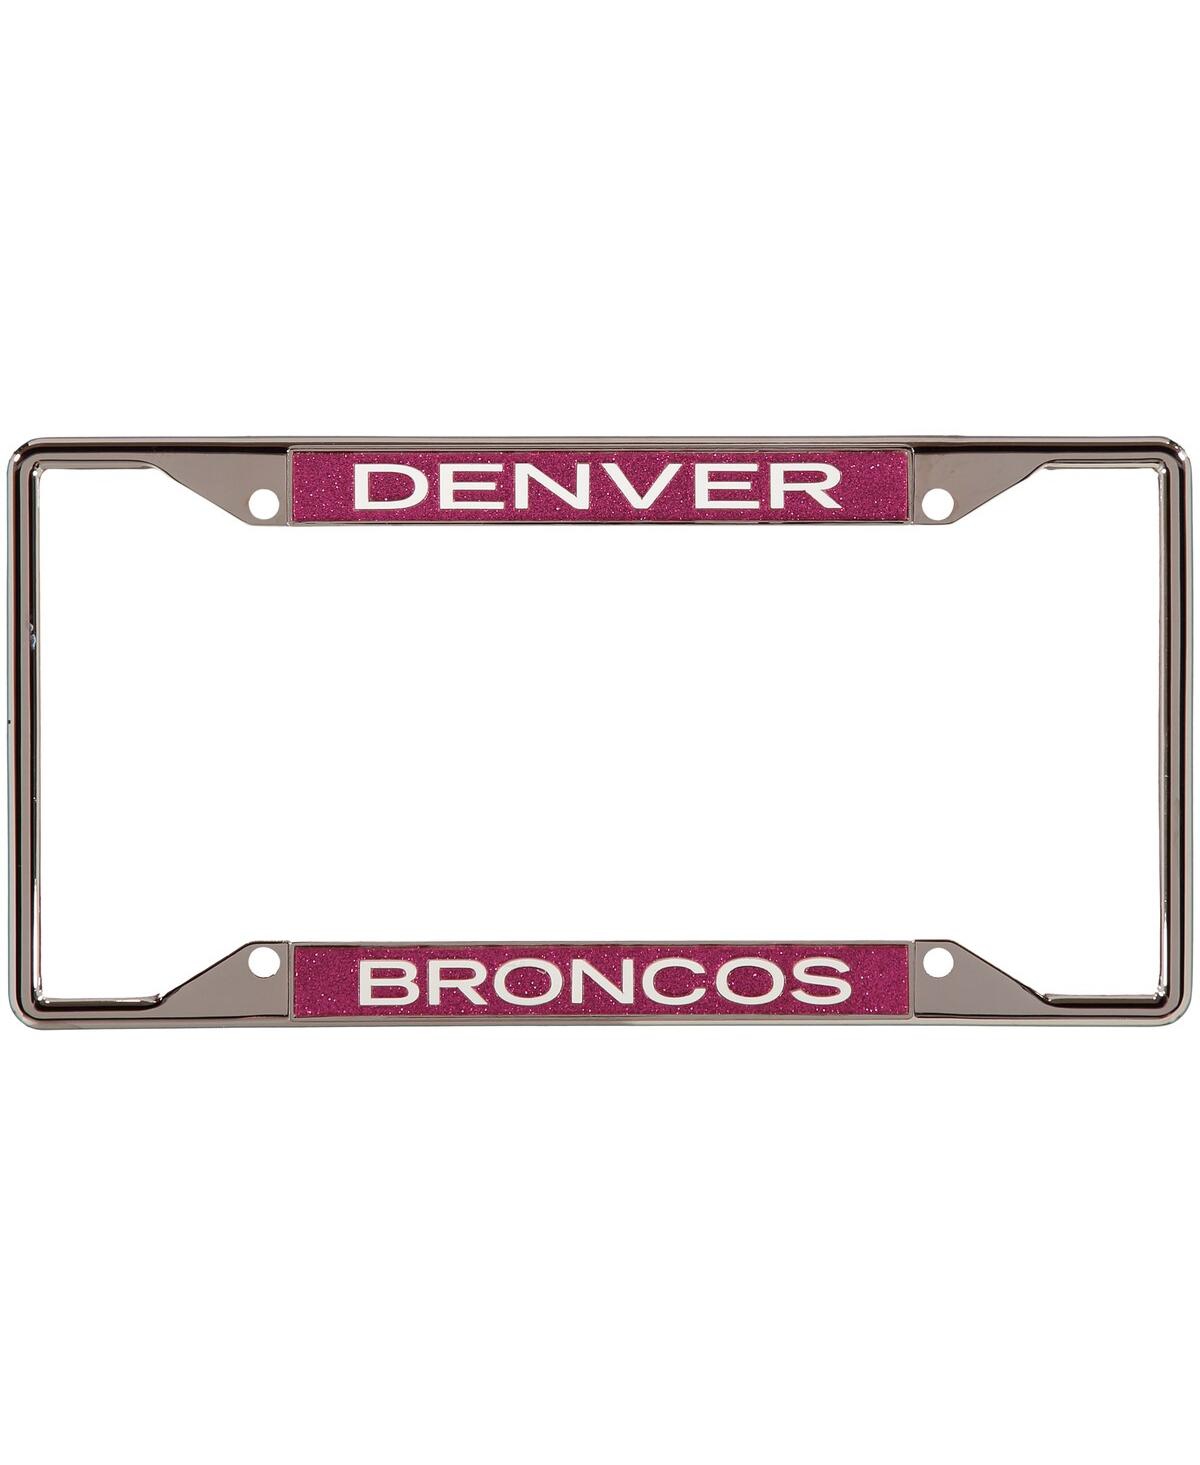 Denver Broncos Pink Glitter License Plate Frame with White Lettering - Pink